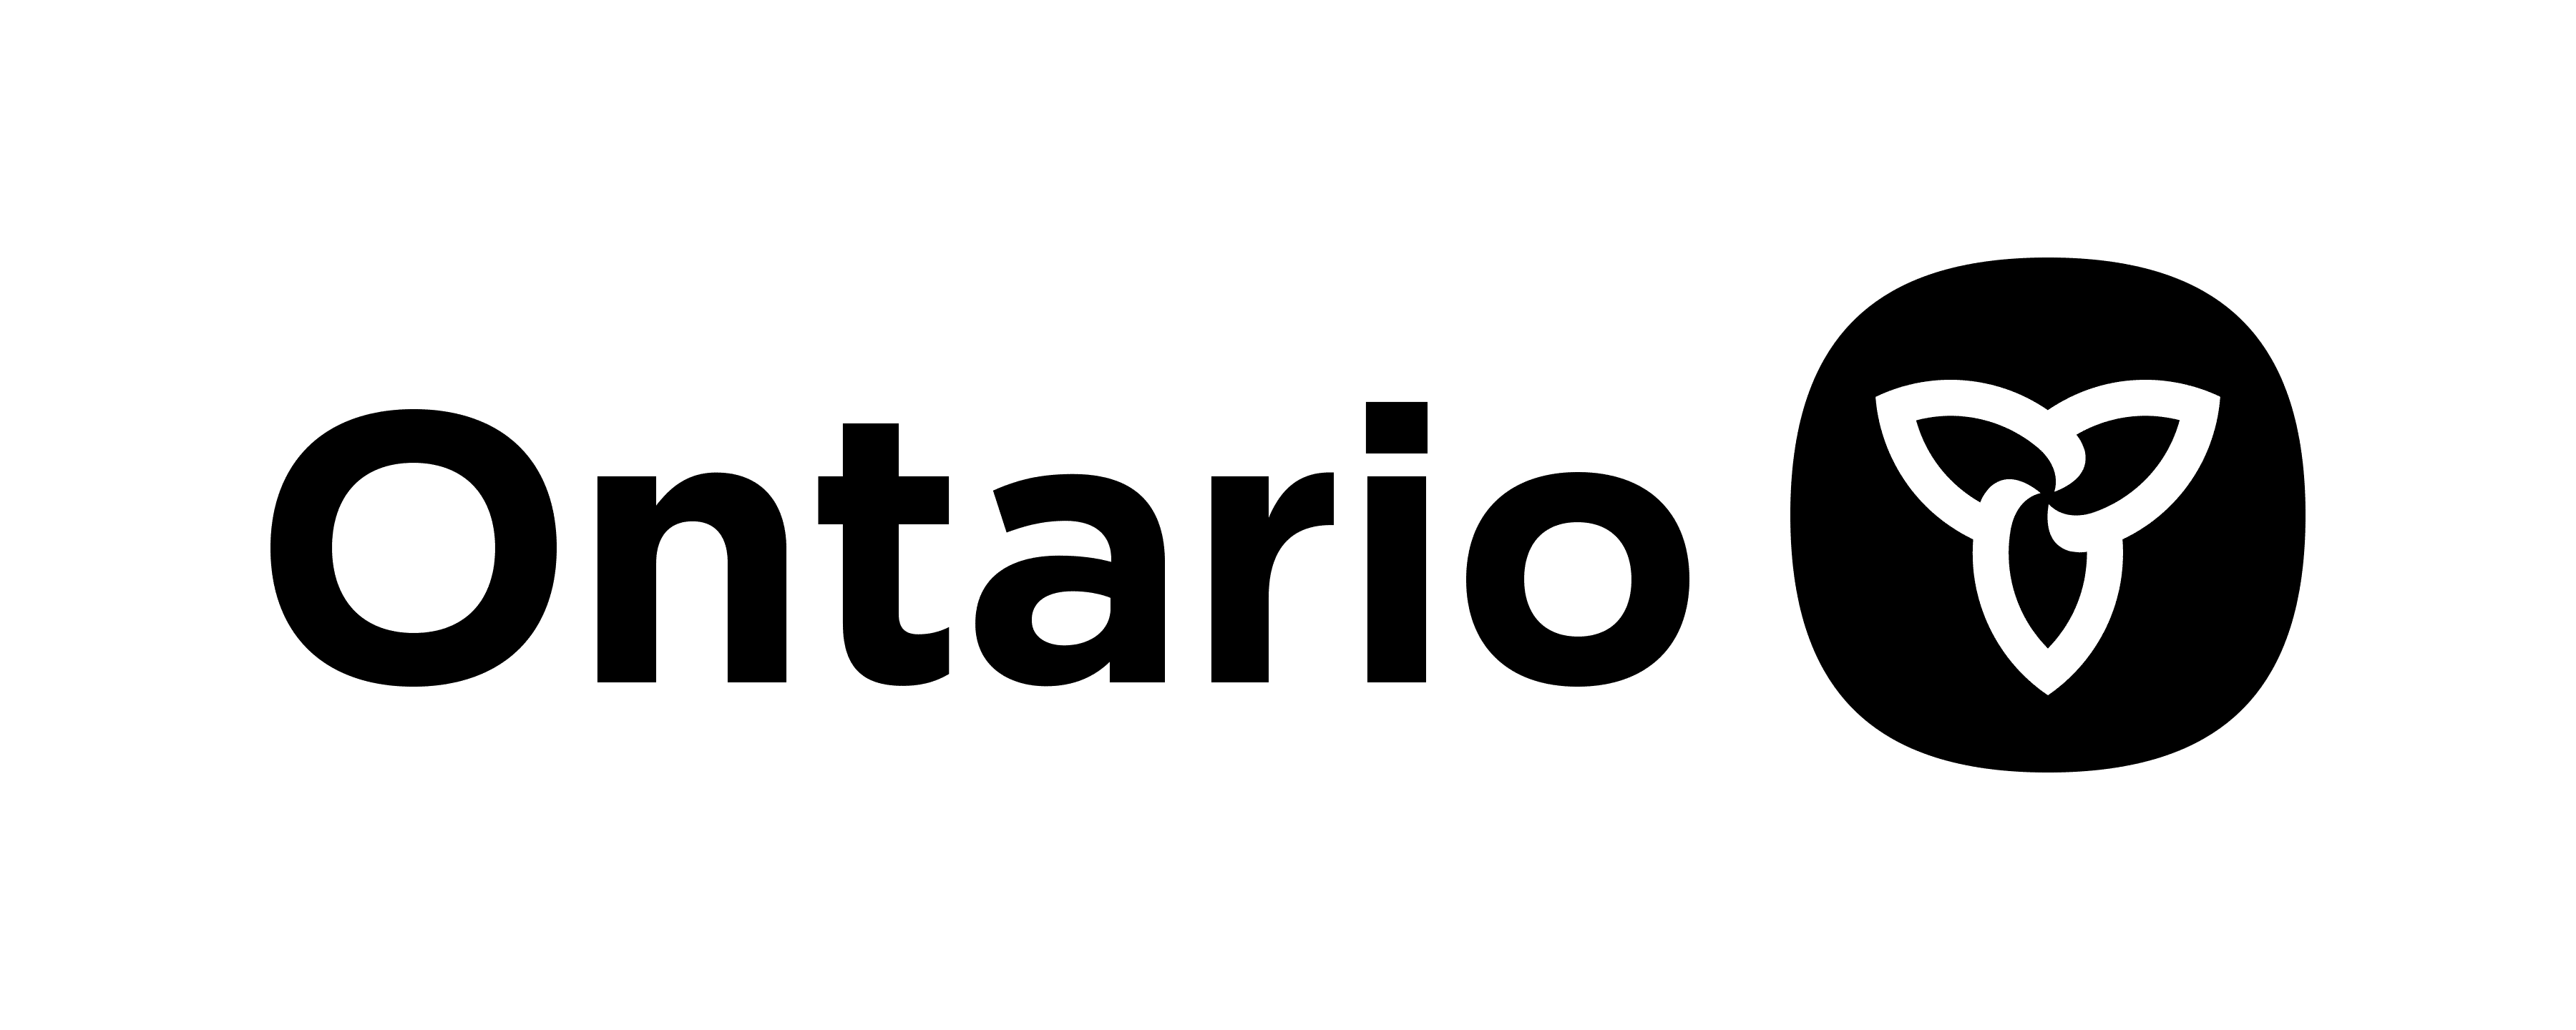 Ontario funding logo